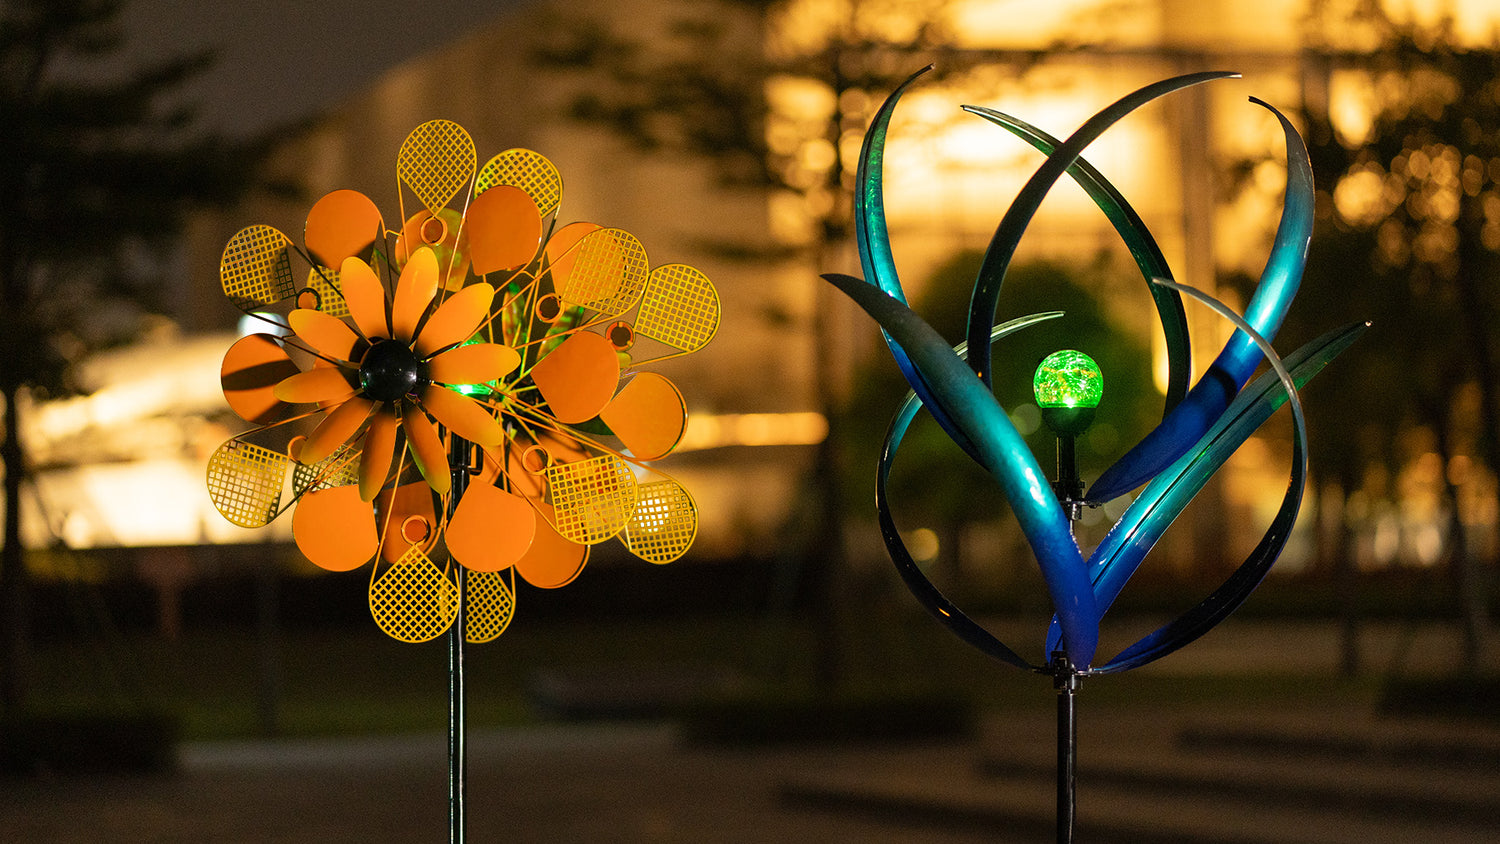 Outdoor Wind Sculpture with Solar Light for Garden